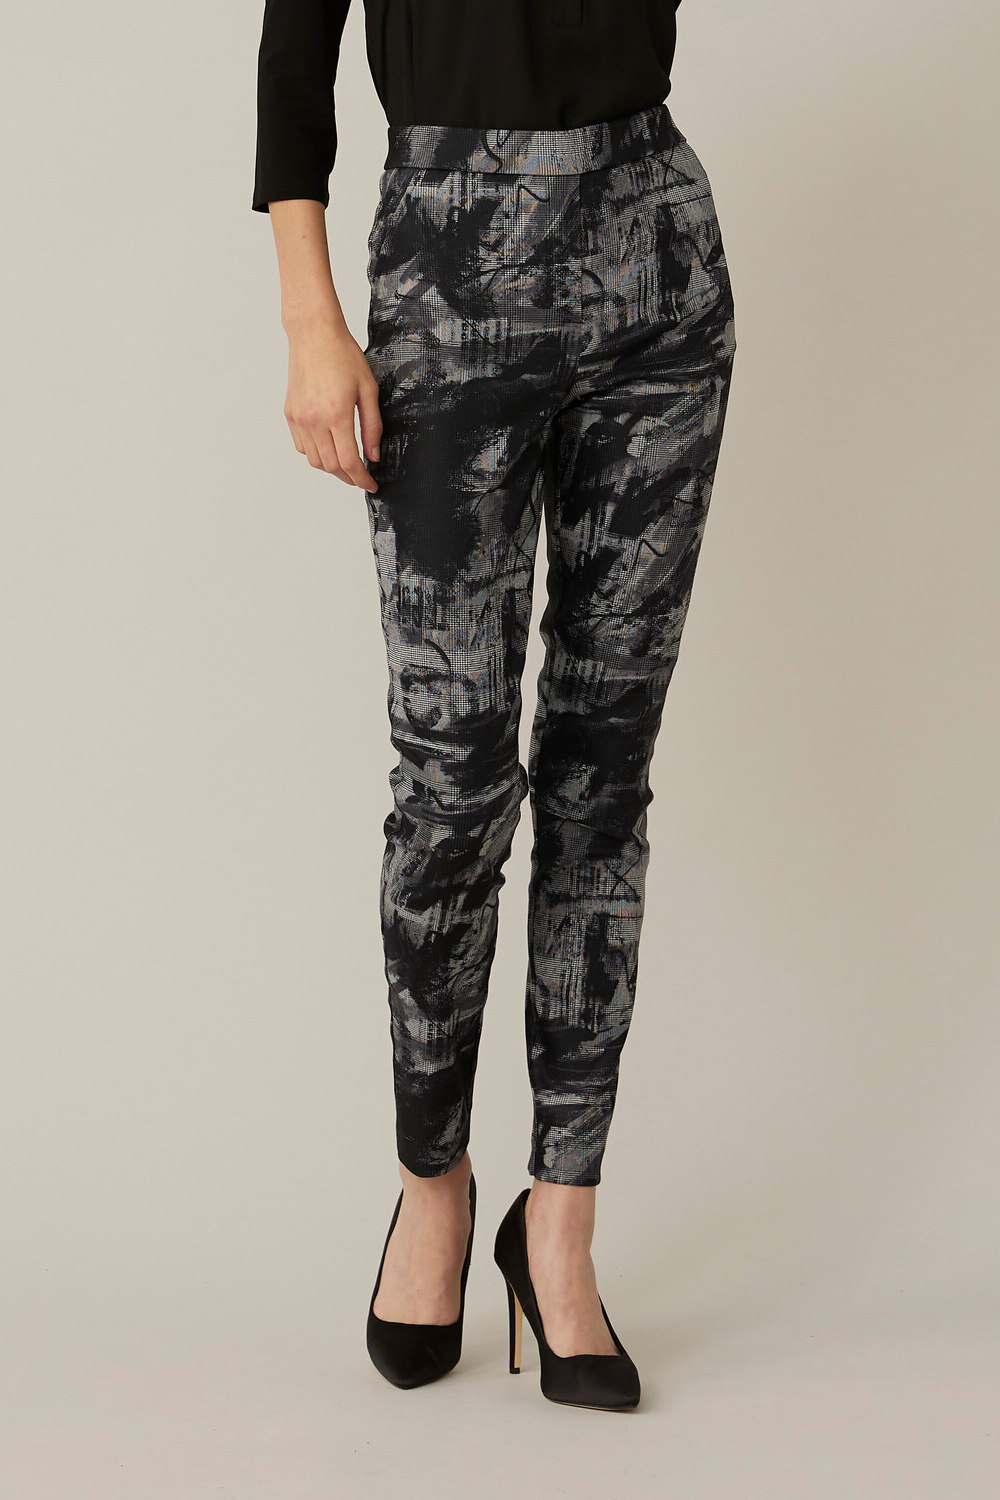 Joseph Ribkoff Graphic & Plaid Pants Style 221136. Black/grey/white